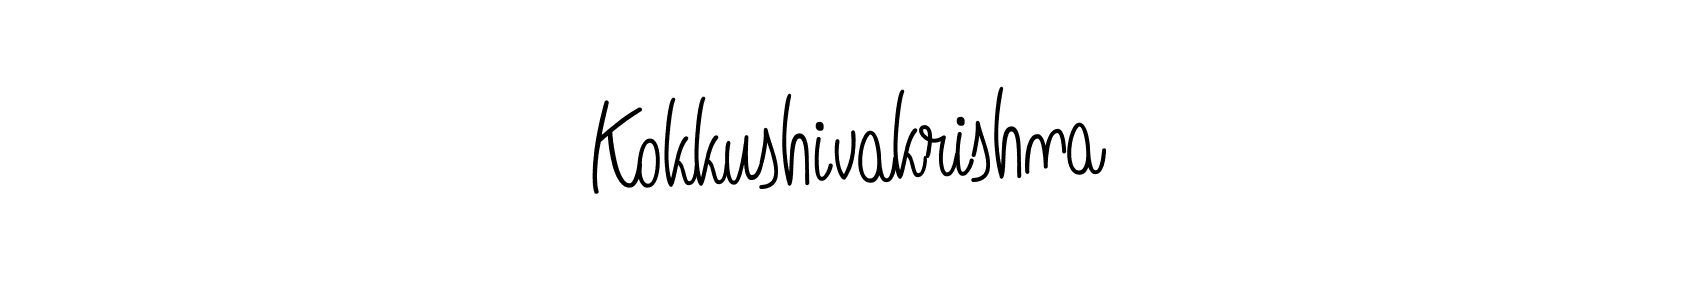 Make a beautiful signature design for name Kokkushivakrishna. Use this online signature maker to create a handwritten signature for free. Kokkushivakrishna signature style 5 images and pictures png